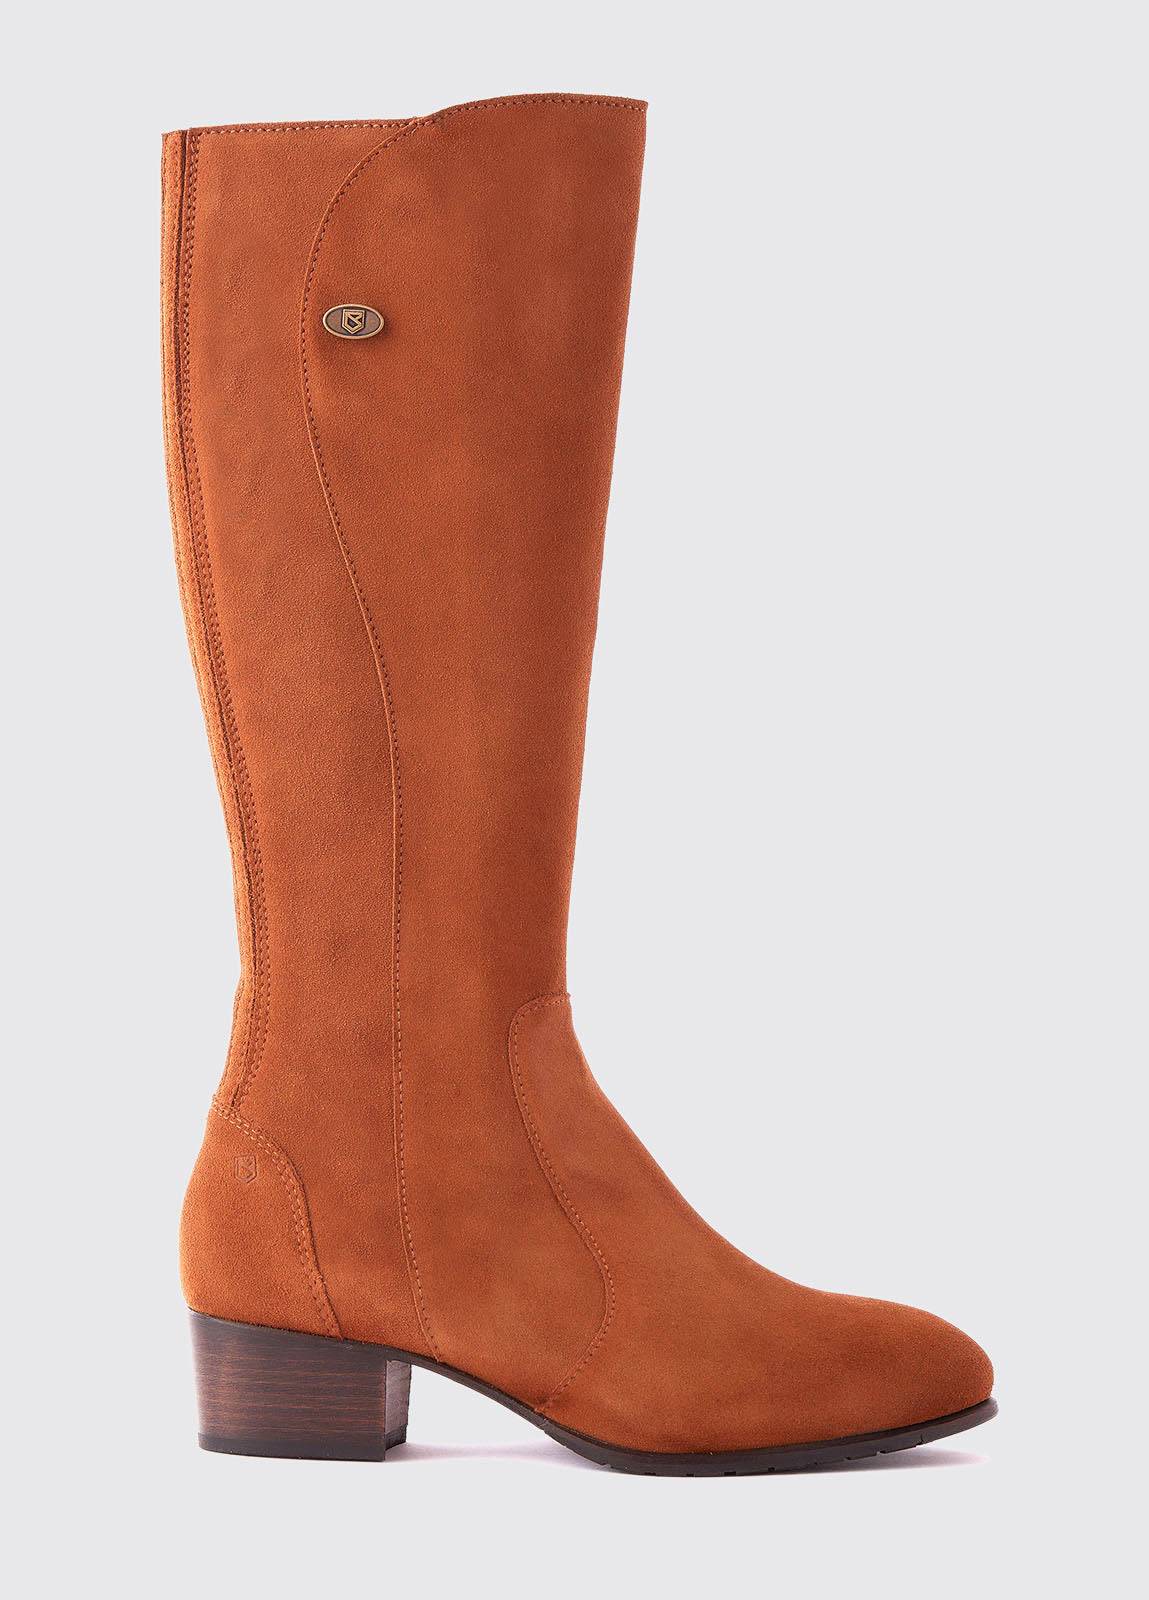 Dubarry Ladies Downpatrick Knee High Boot in Camel Suede